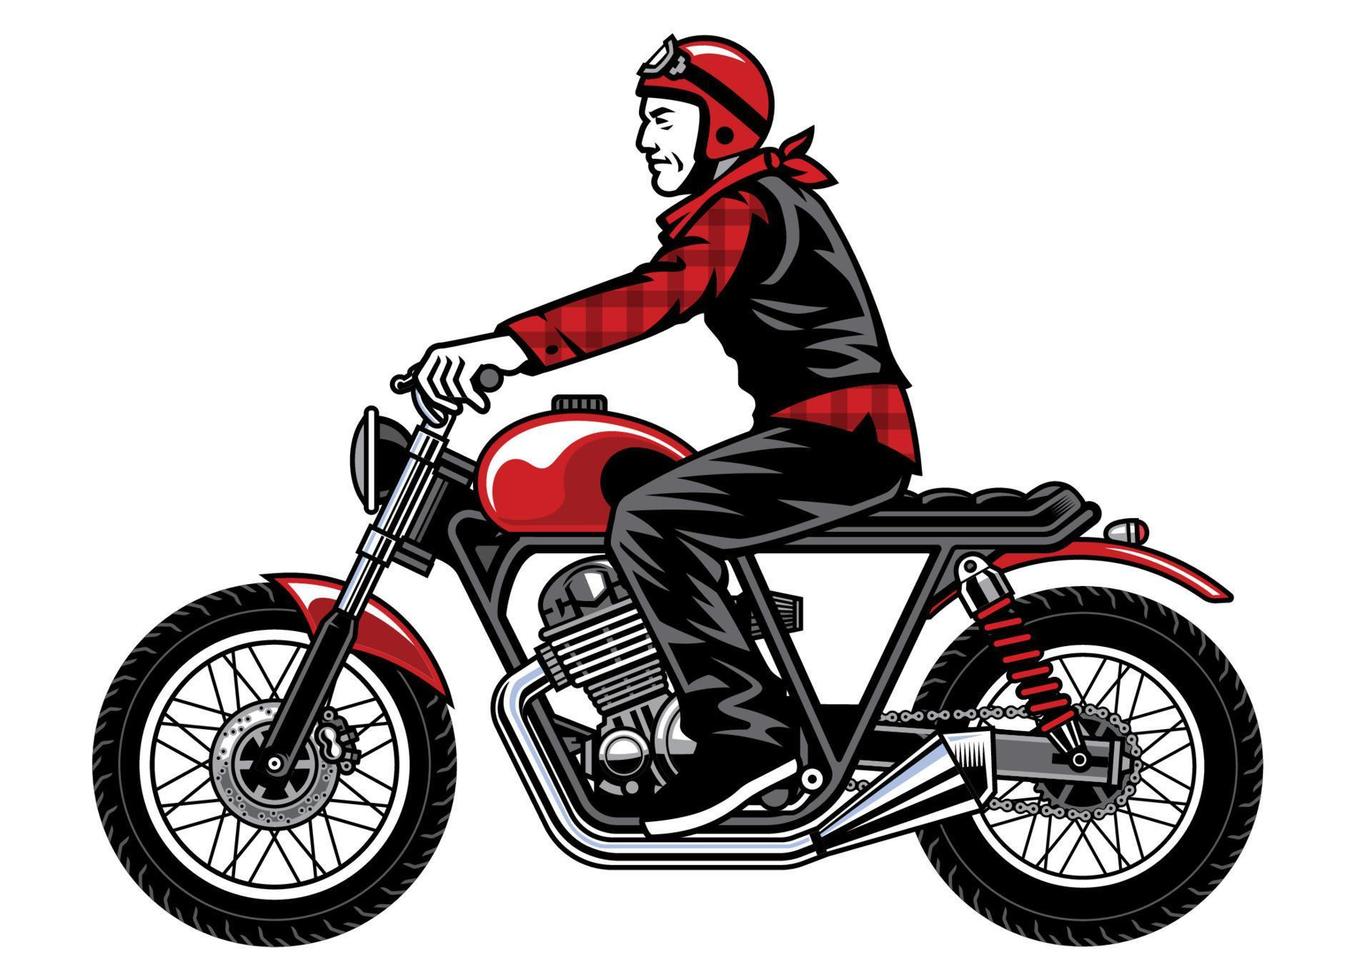 uomo equitazione Vintage ▾ costume motociclo vettore